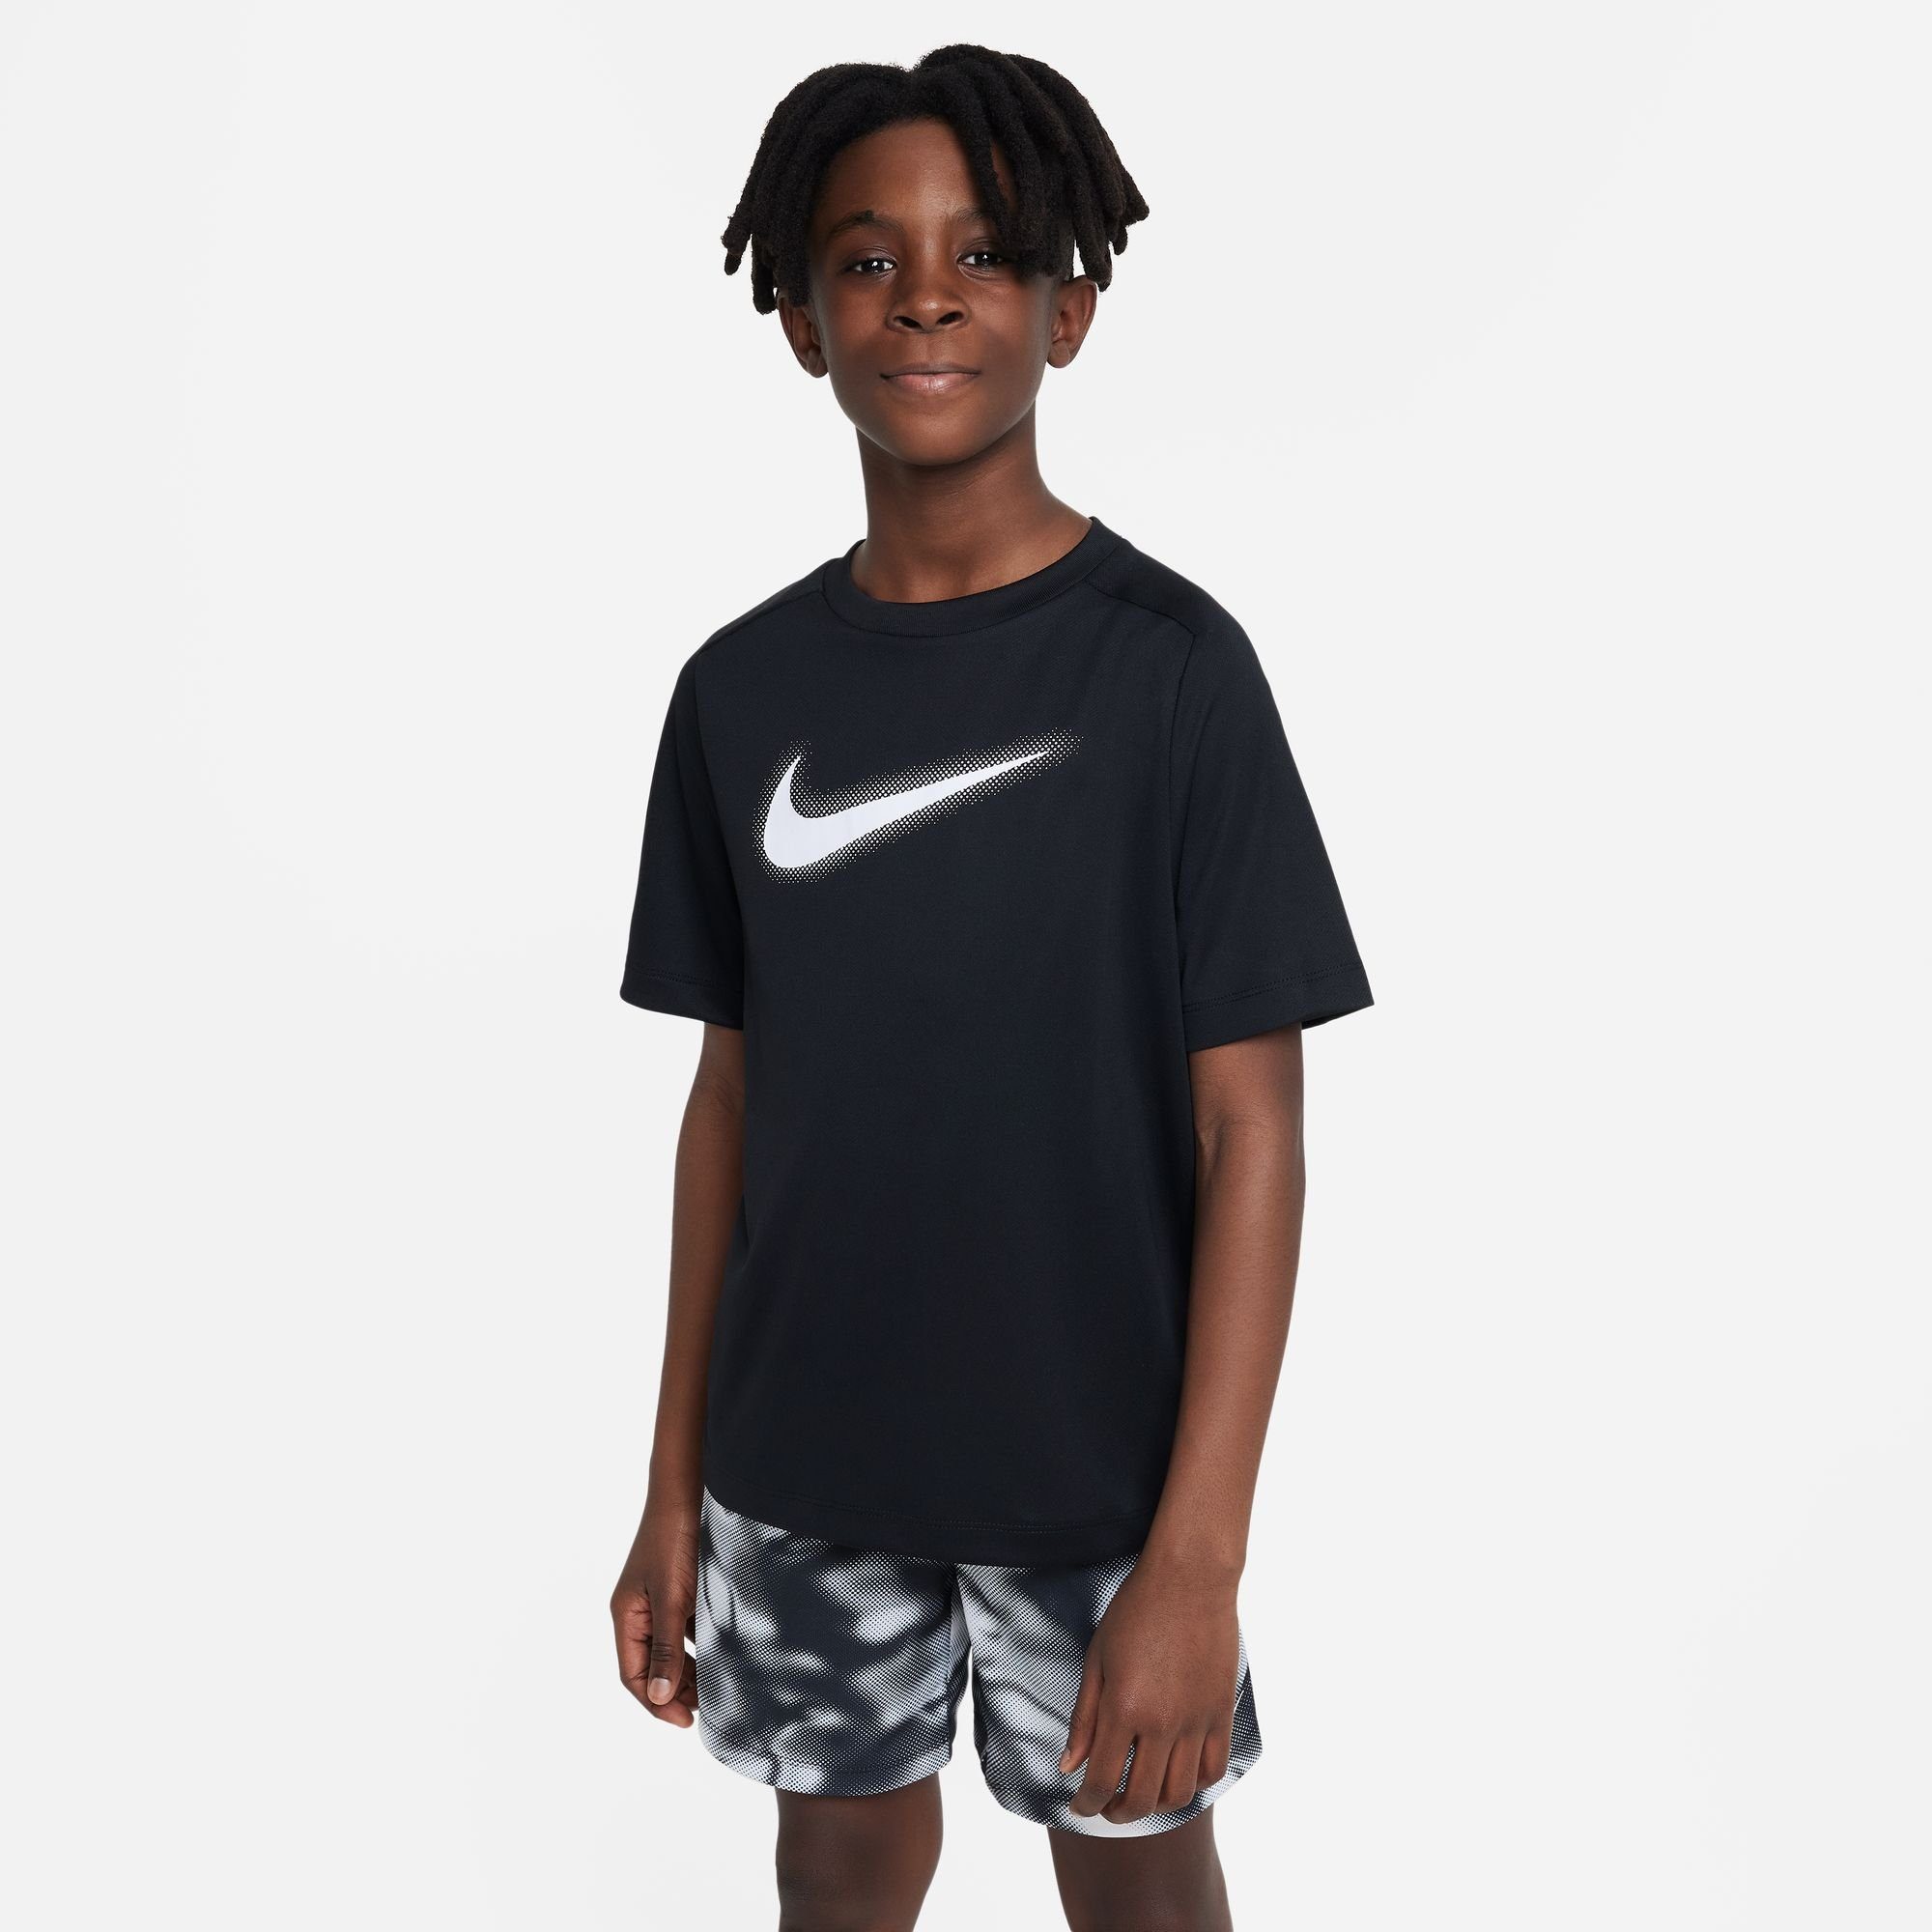 BLACK/WHITE KIDS' GRAPHIC Nike Trainingsshirt TRAINING BIG MULTI+ (BOYS) DRI-FIT TOP